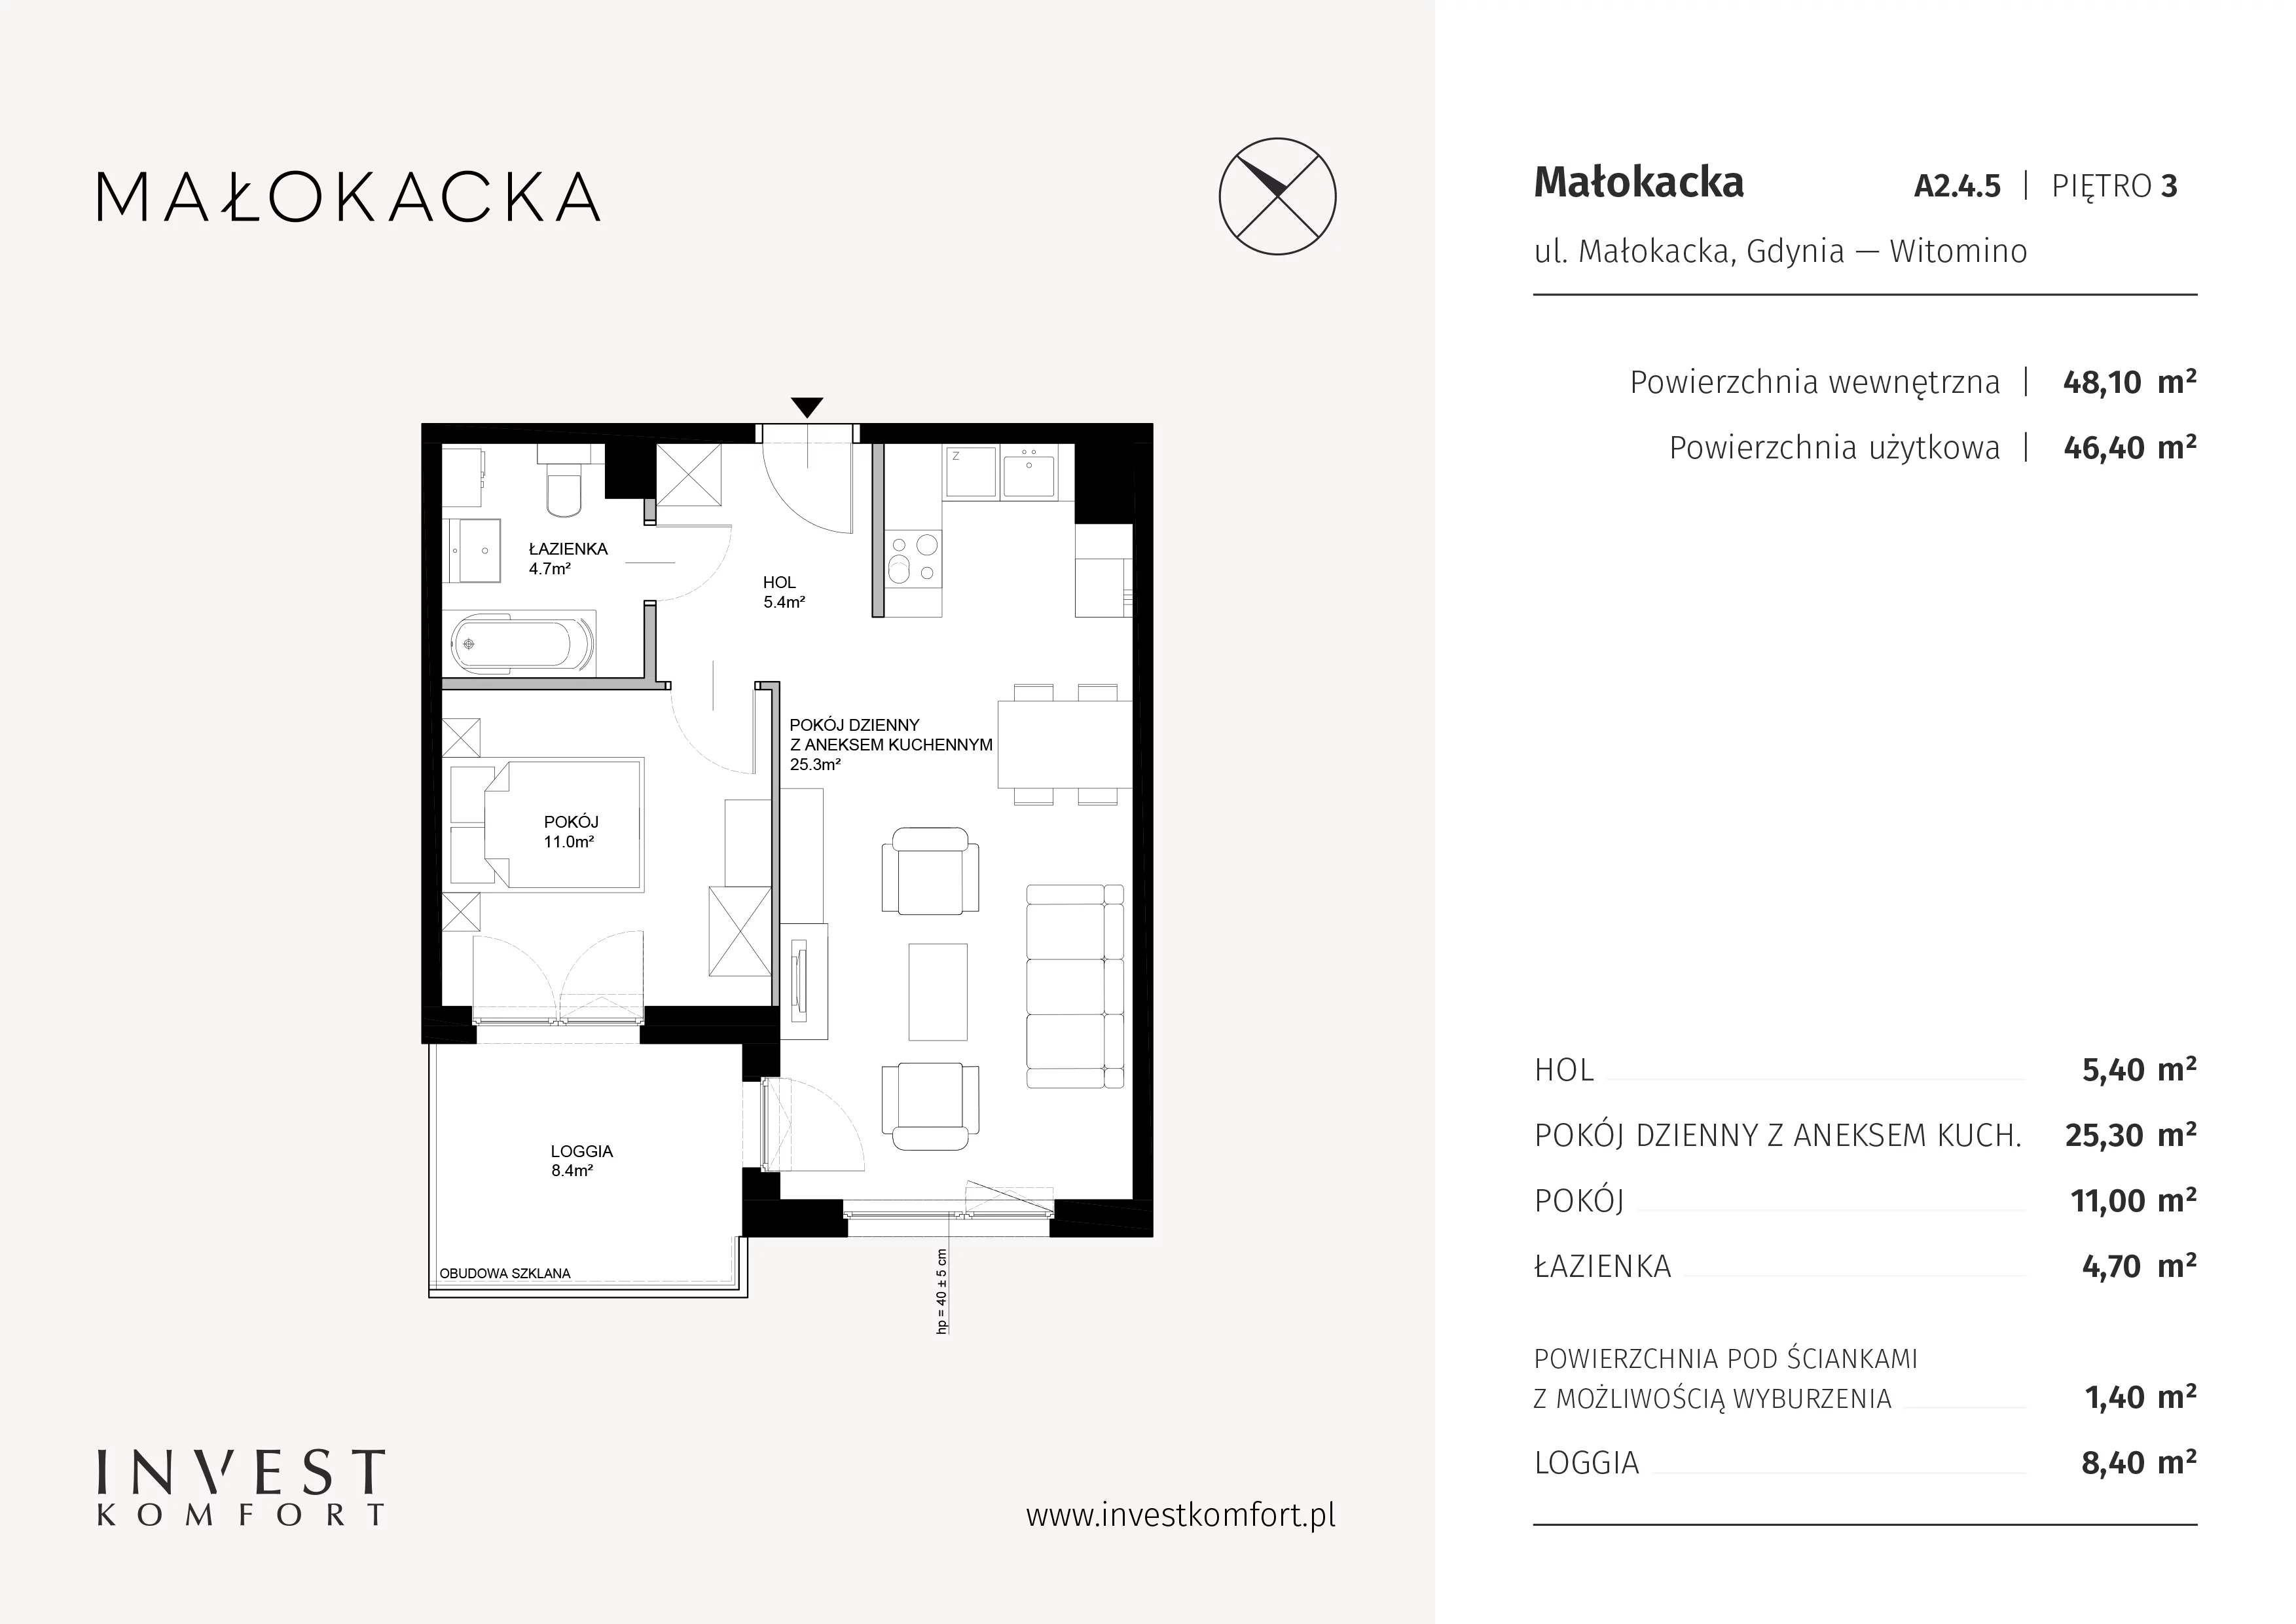 Apartament 48,10 m², piętro 3, oferta nr A2.4.5, Małokacka, Gdynia, Witomino, ul. Małokacka